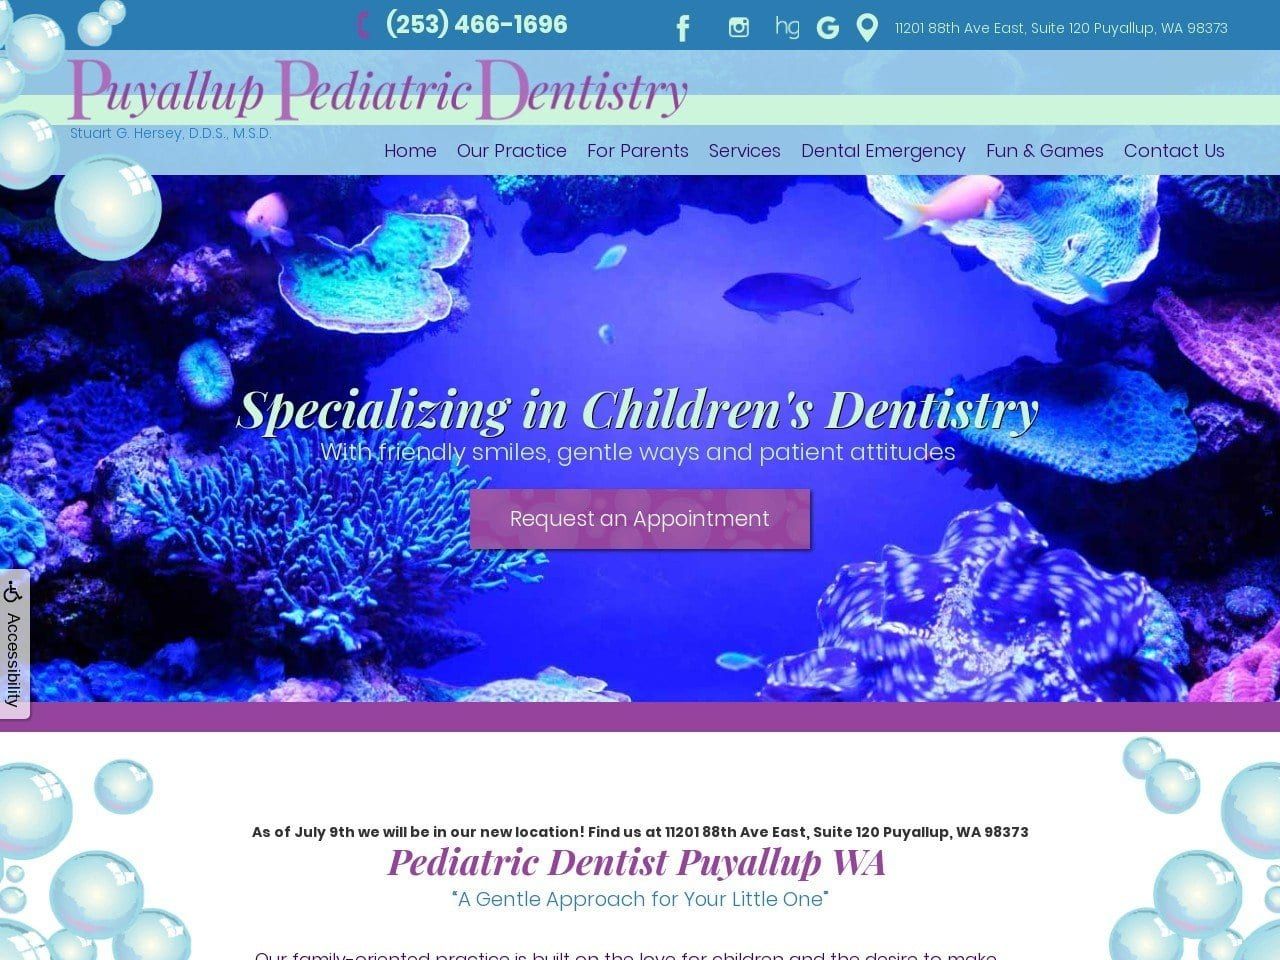 Puyallup Pediatric Dentist Website Screenshot from smilesforkids.com